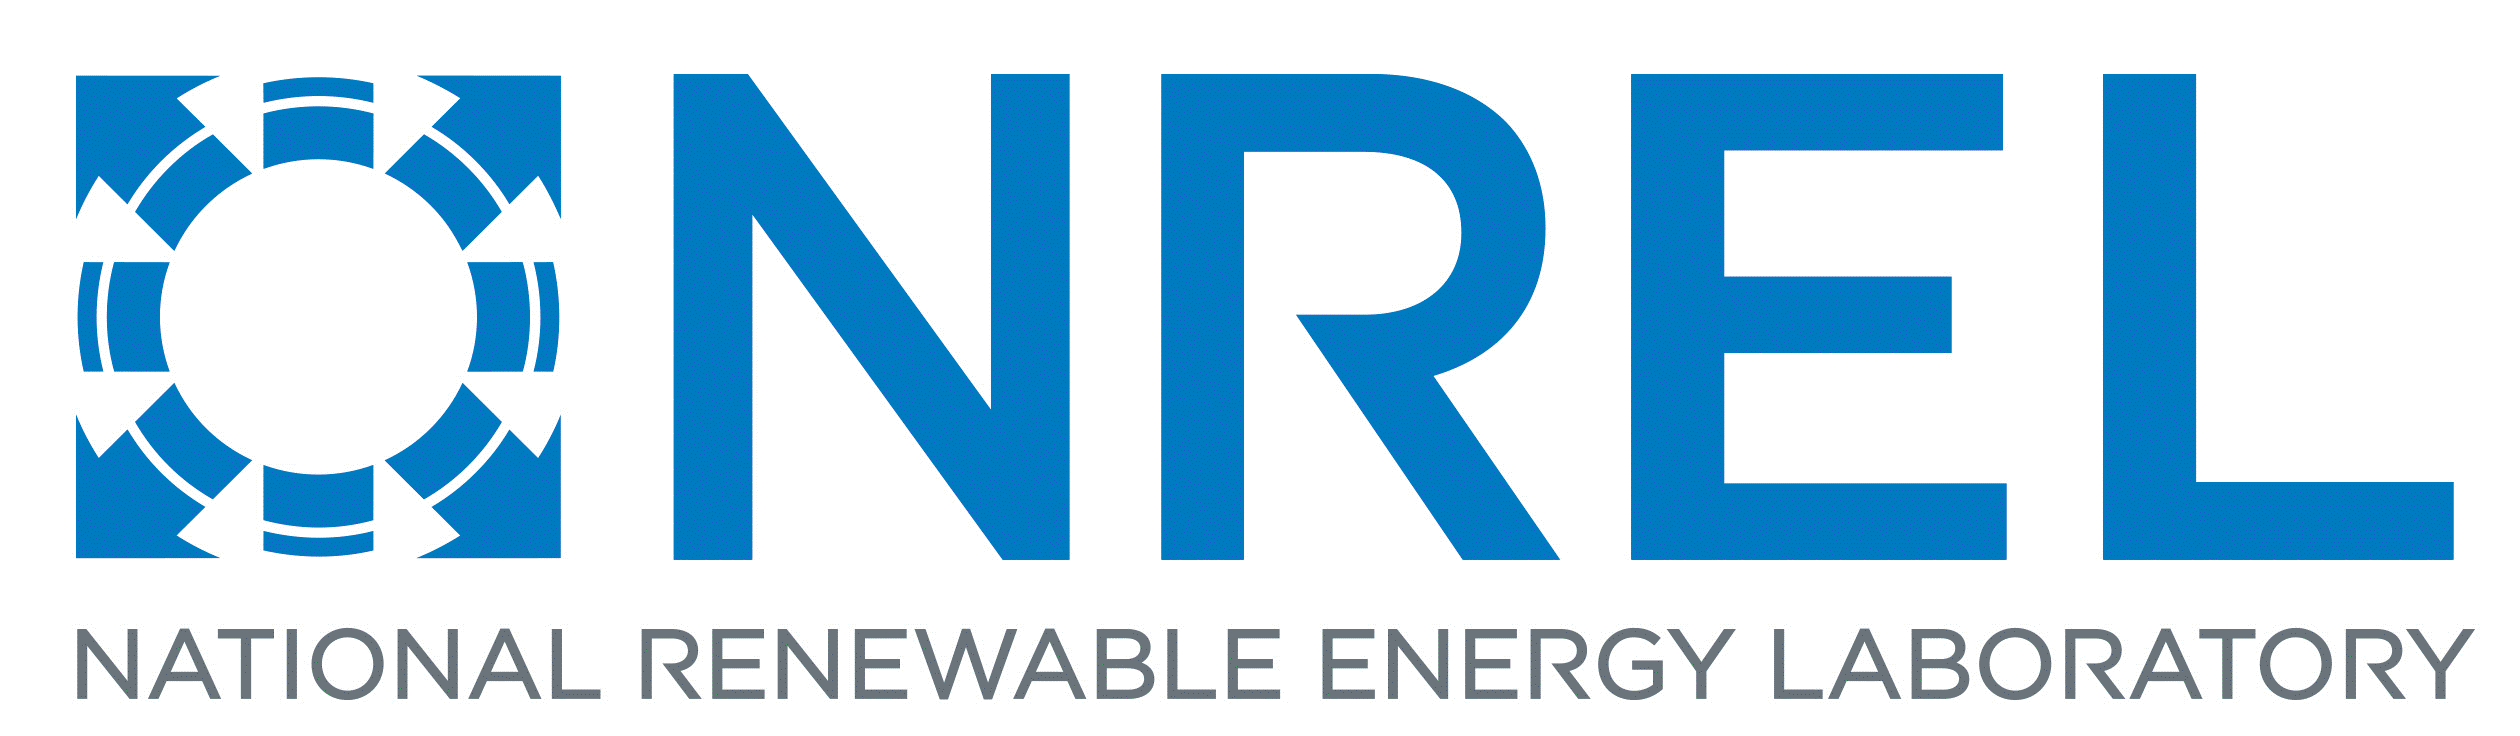 National Renewable Energy Laboratory's website